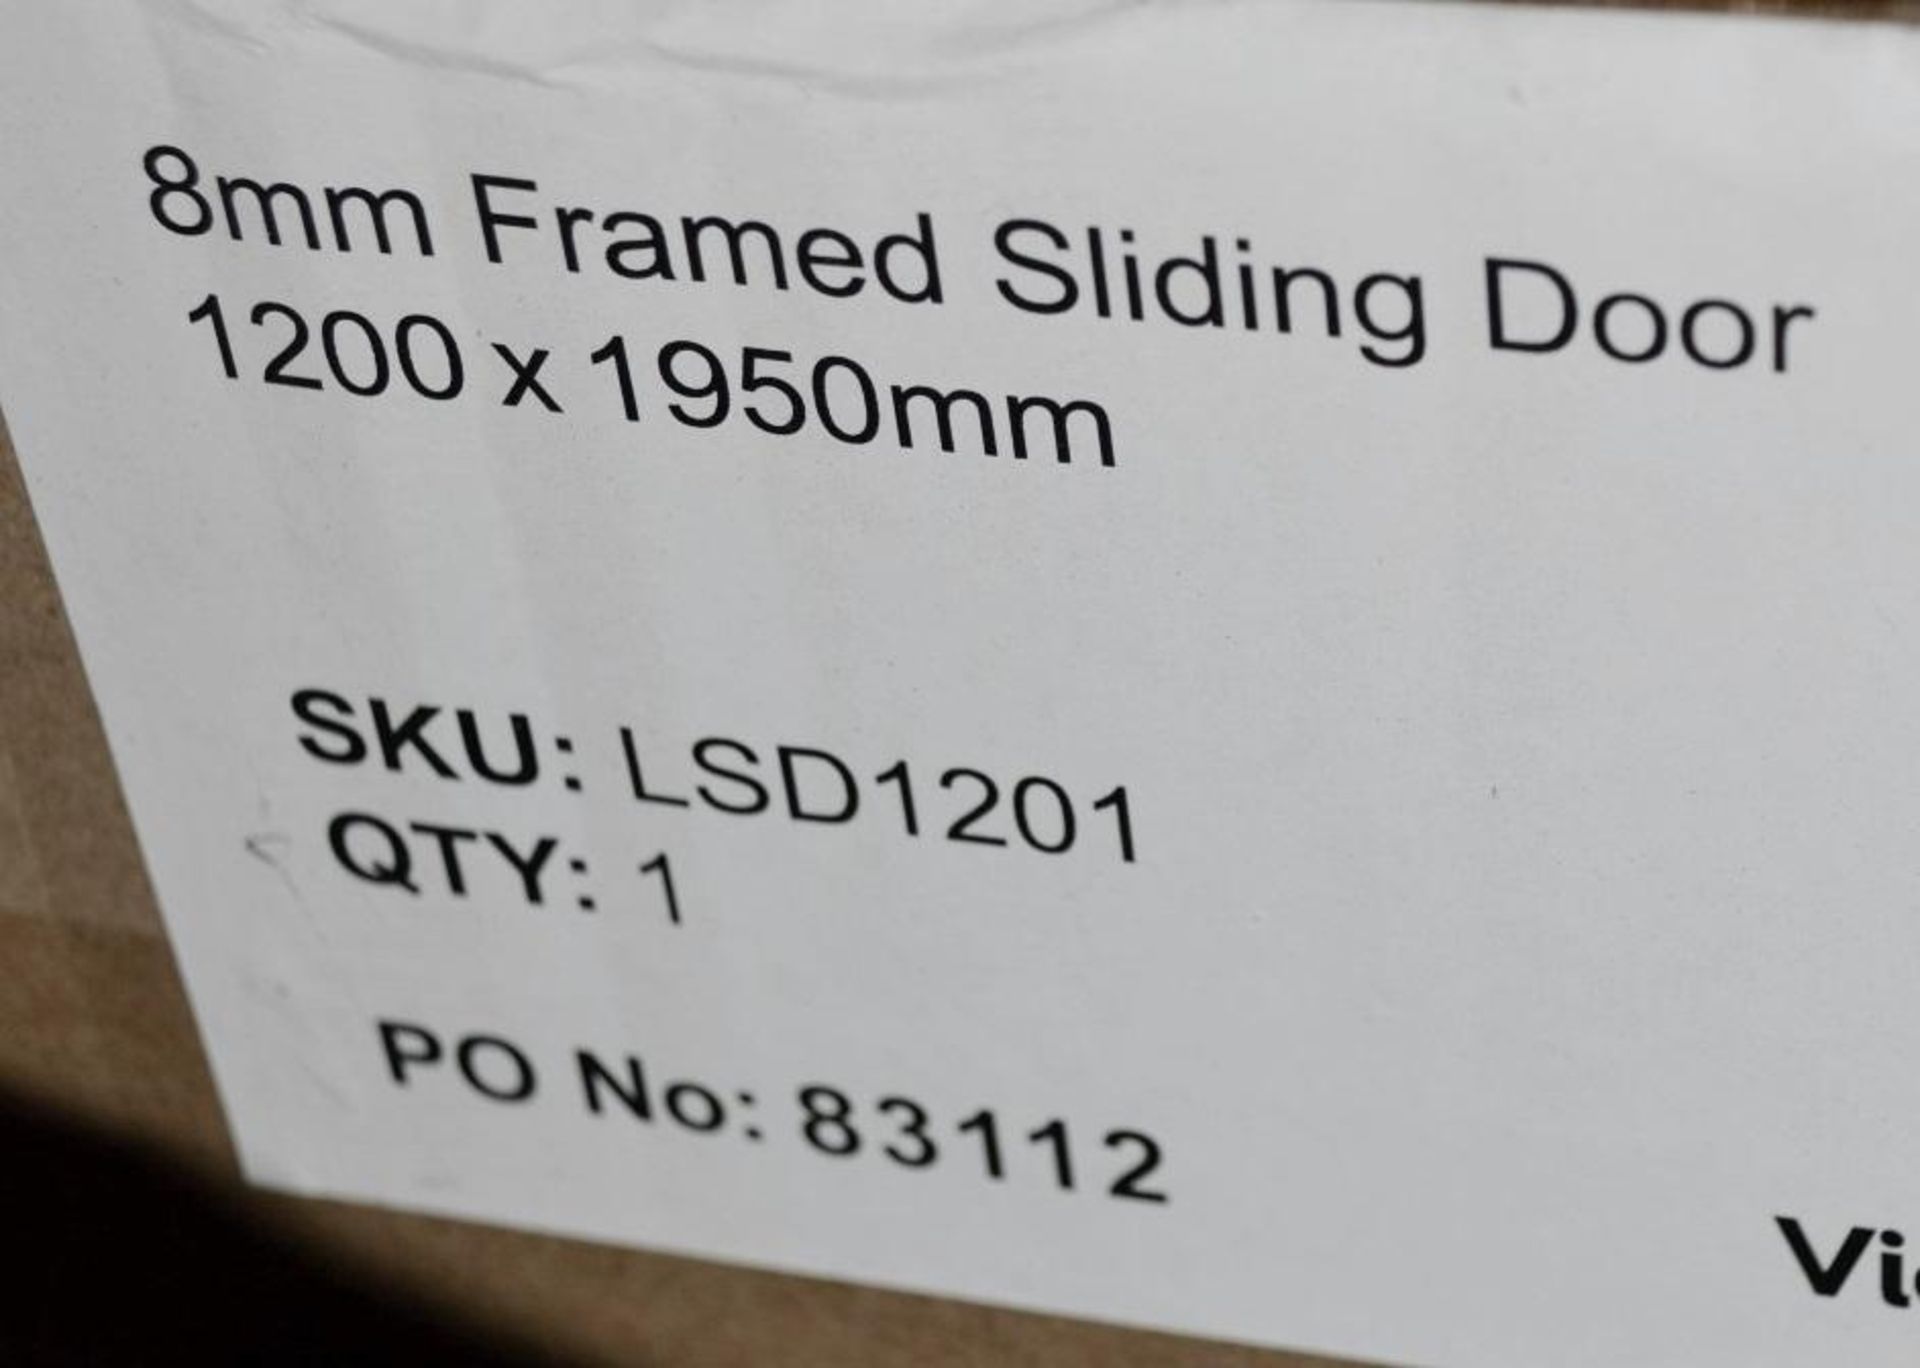 1 x 8mm Framed Sliding Door - New / Unused Stock - Dimensions: 1200 x 1950mm - CL269 - Ref MT656 - L - Image 3 of 3